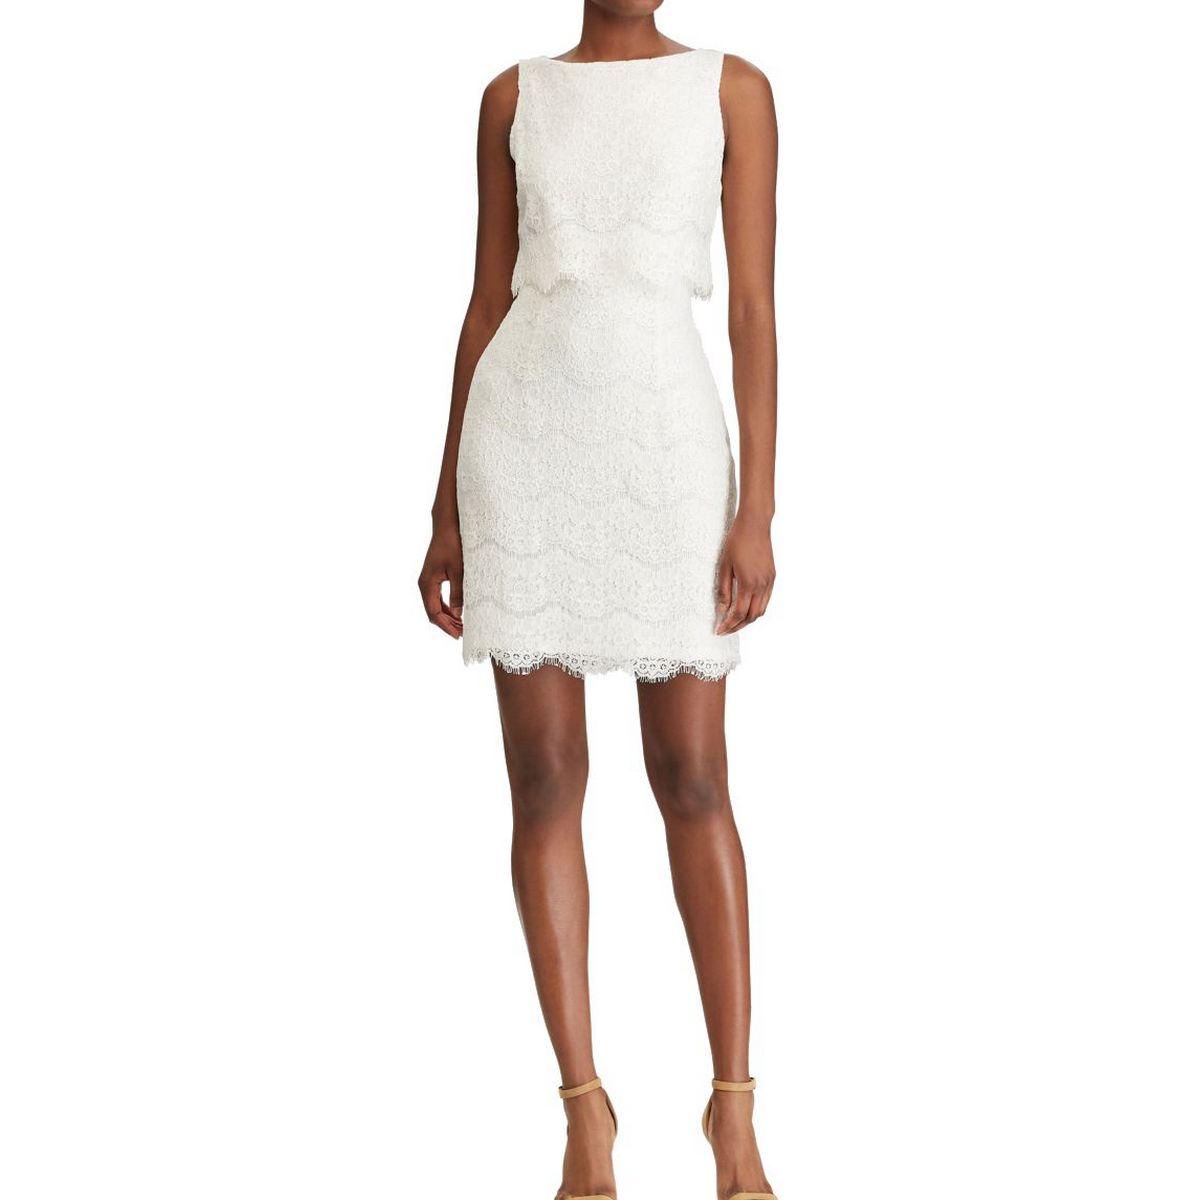 AMERICAN LIVING NEW Women's White Scalloped Lace Popover Sheath Dress 2 ...